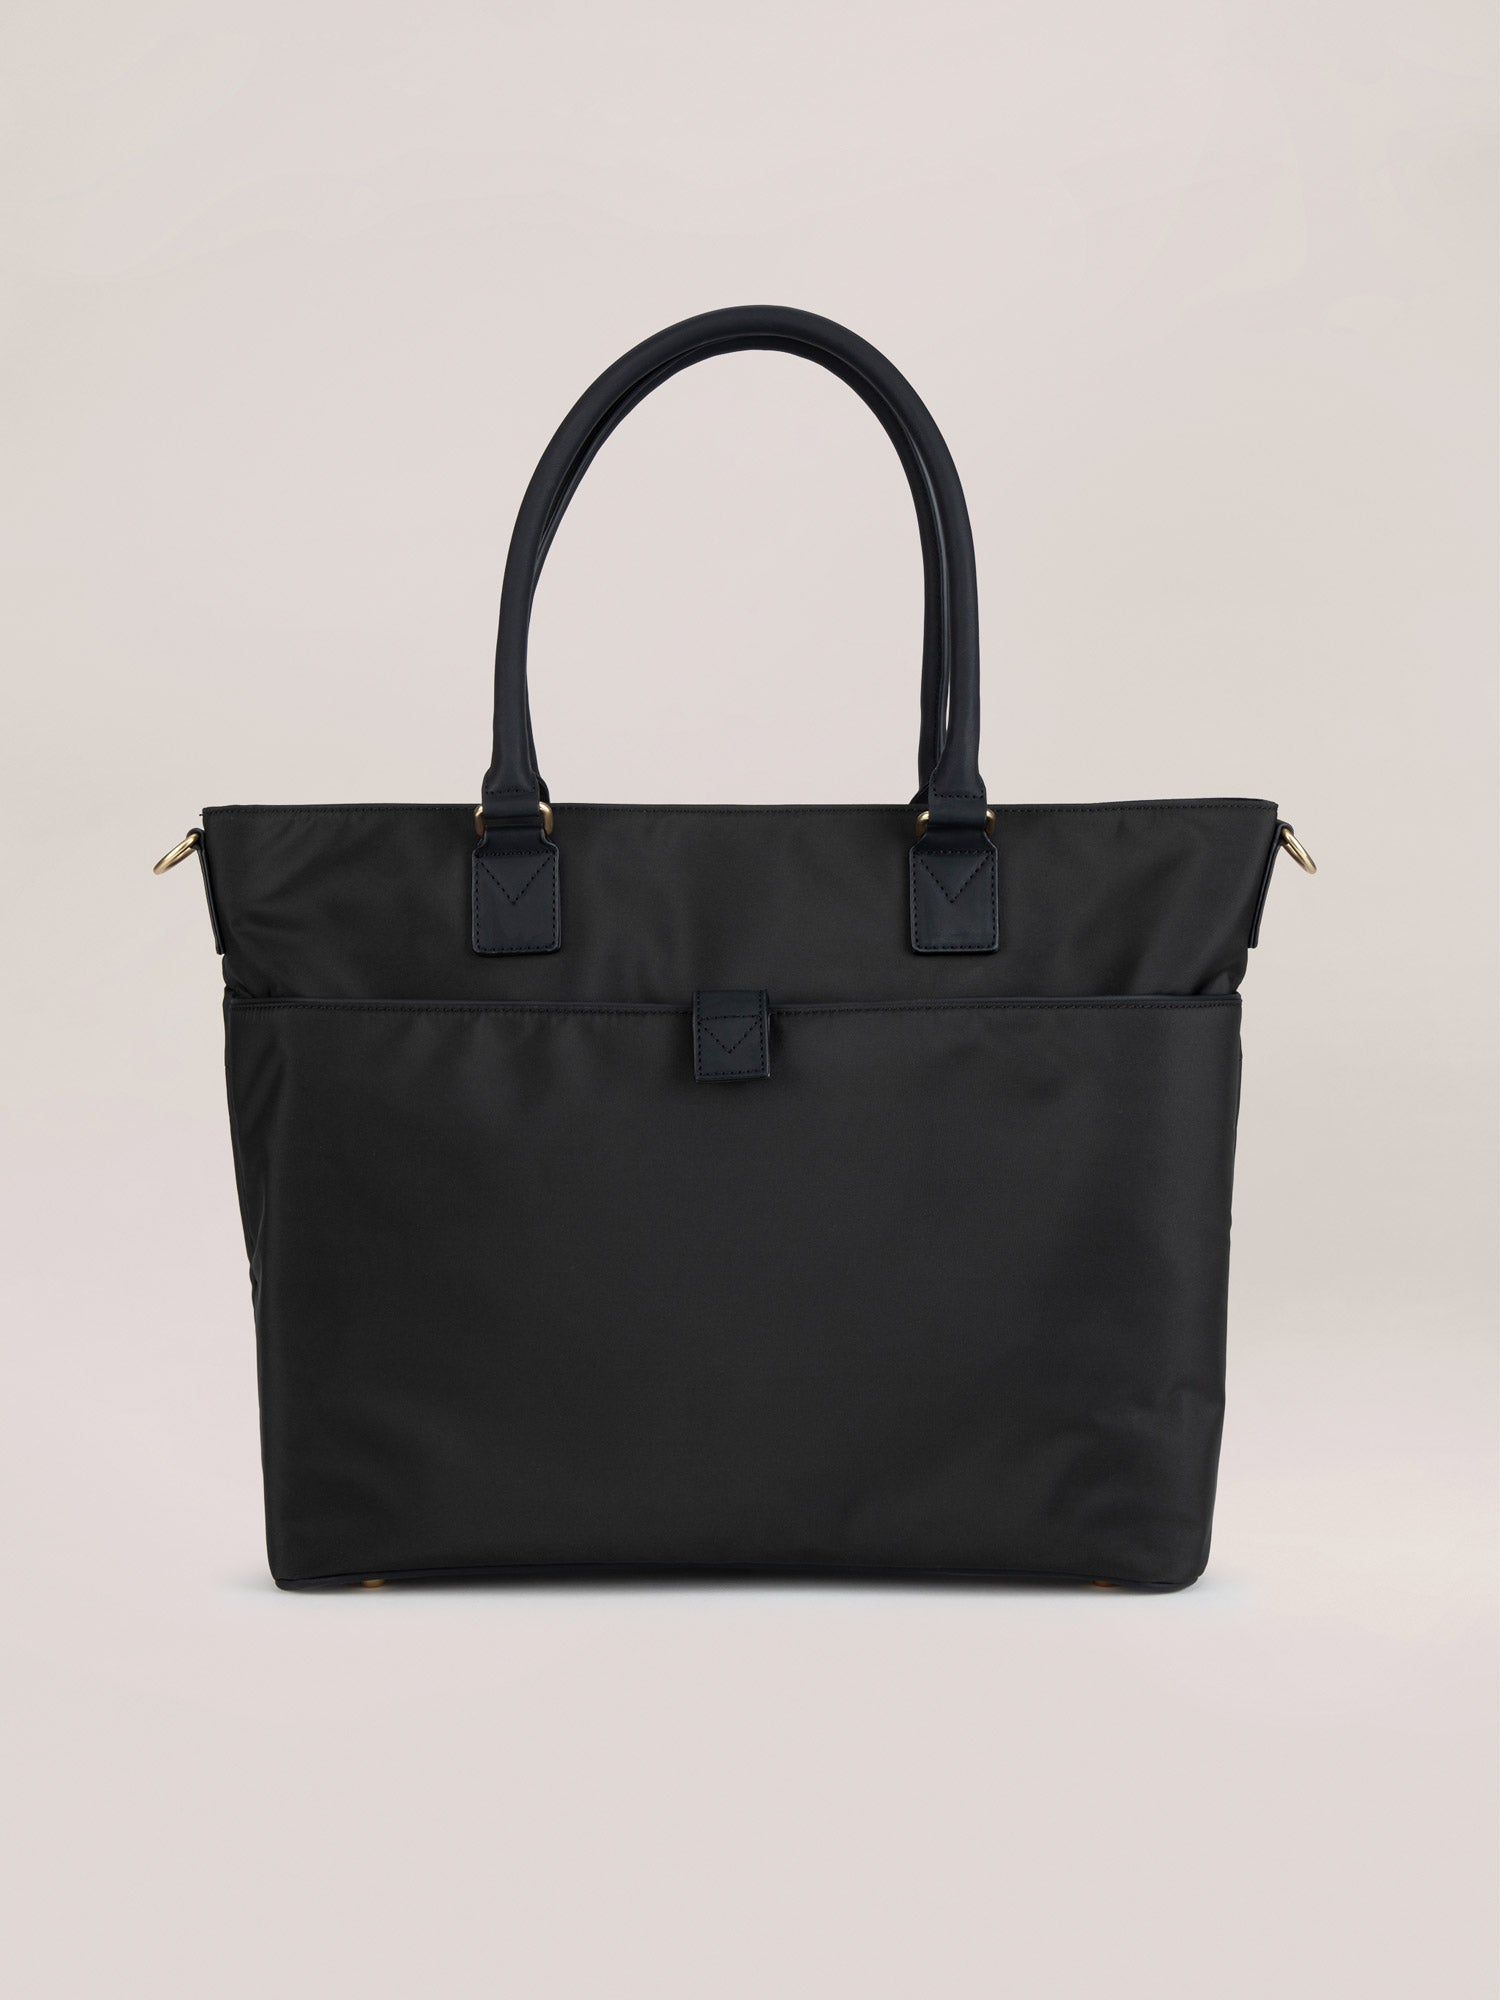 Hoja Negra Apparel Black Eco Tote Bag